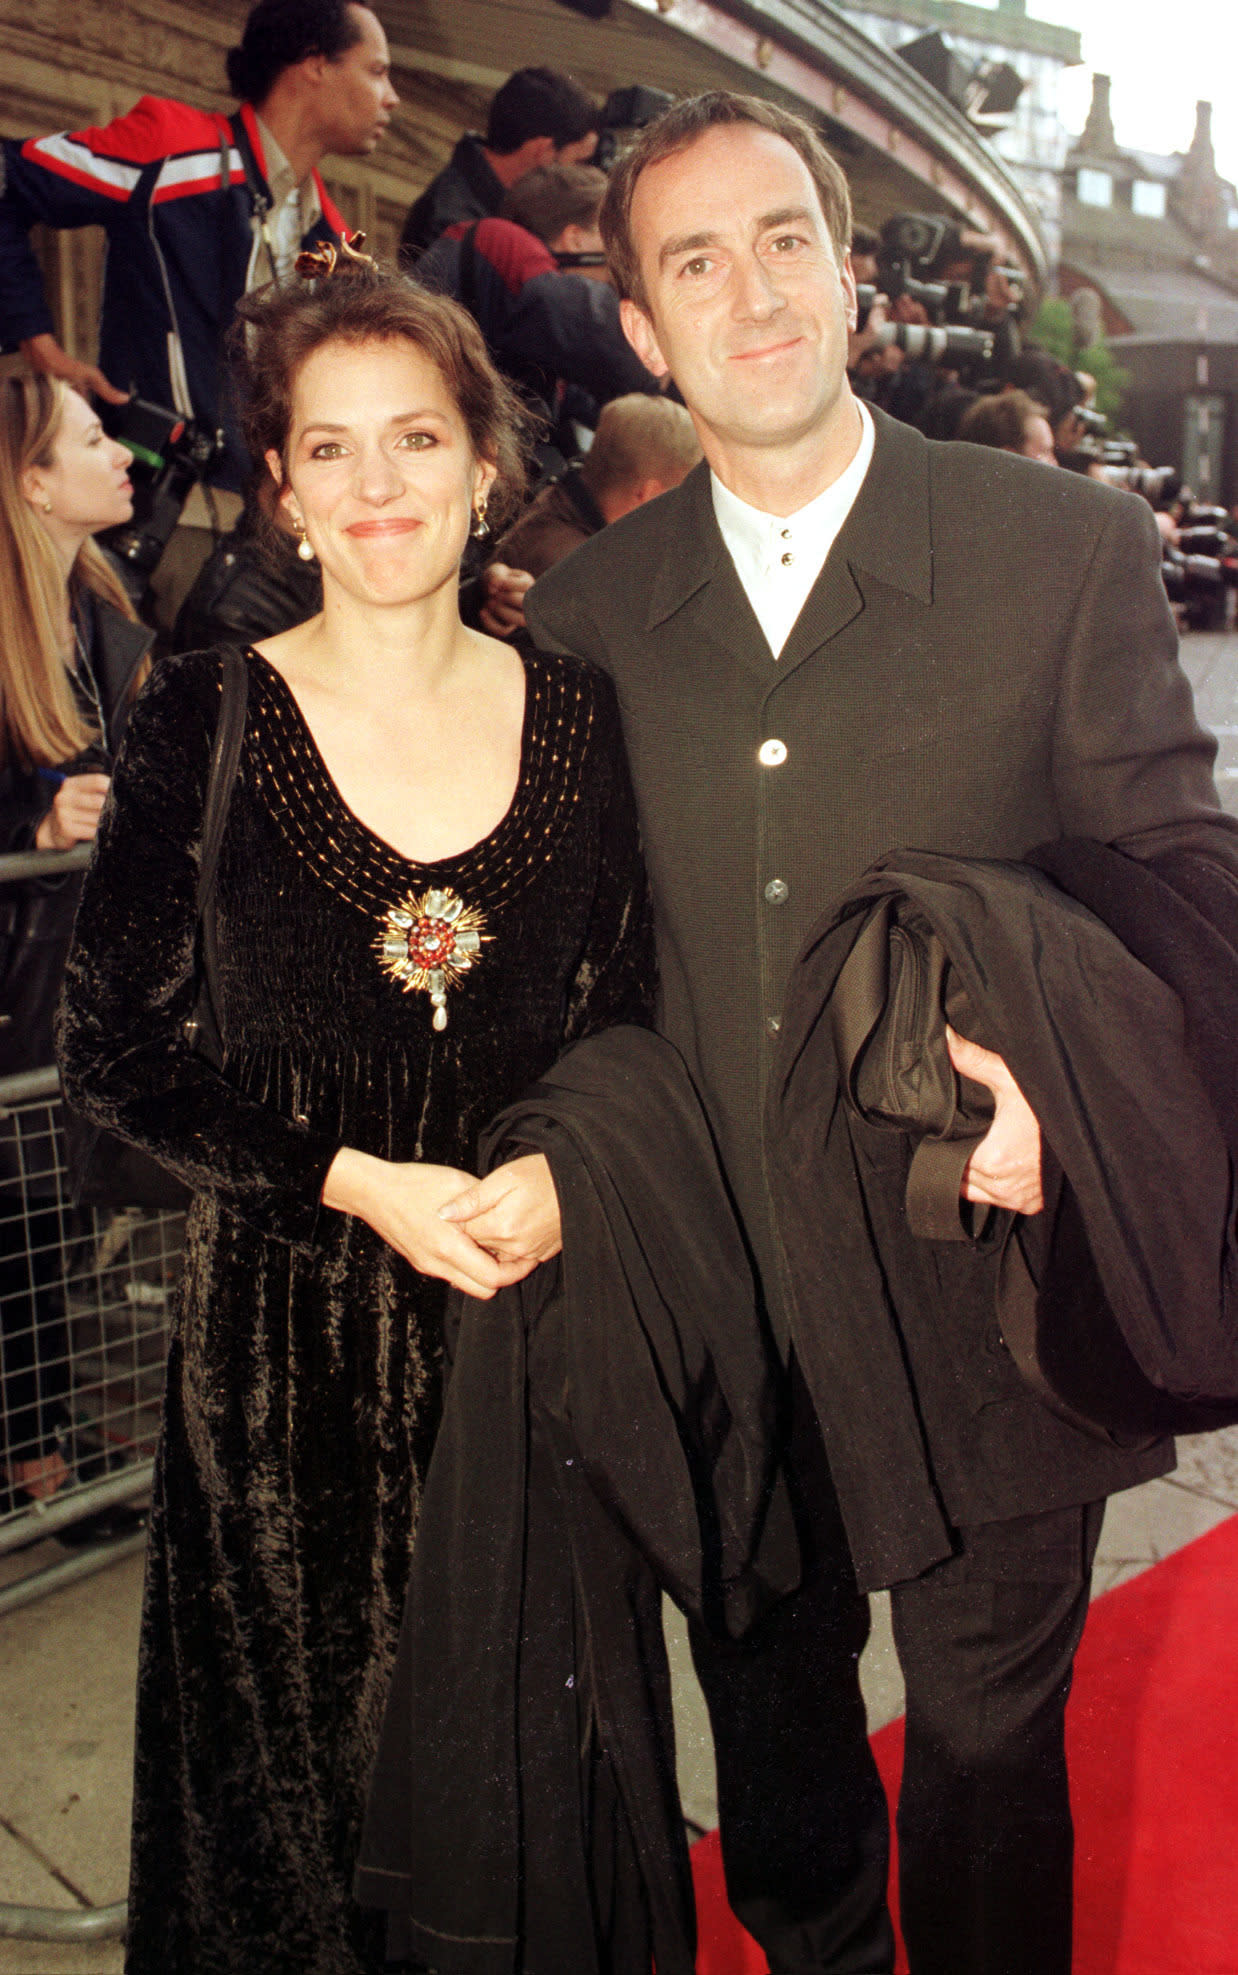 TV presenter Angus Deayton and his partner Lise Meyer arrive at the Royal Albert Hall for the BAFTA award ceremony.